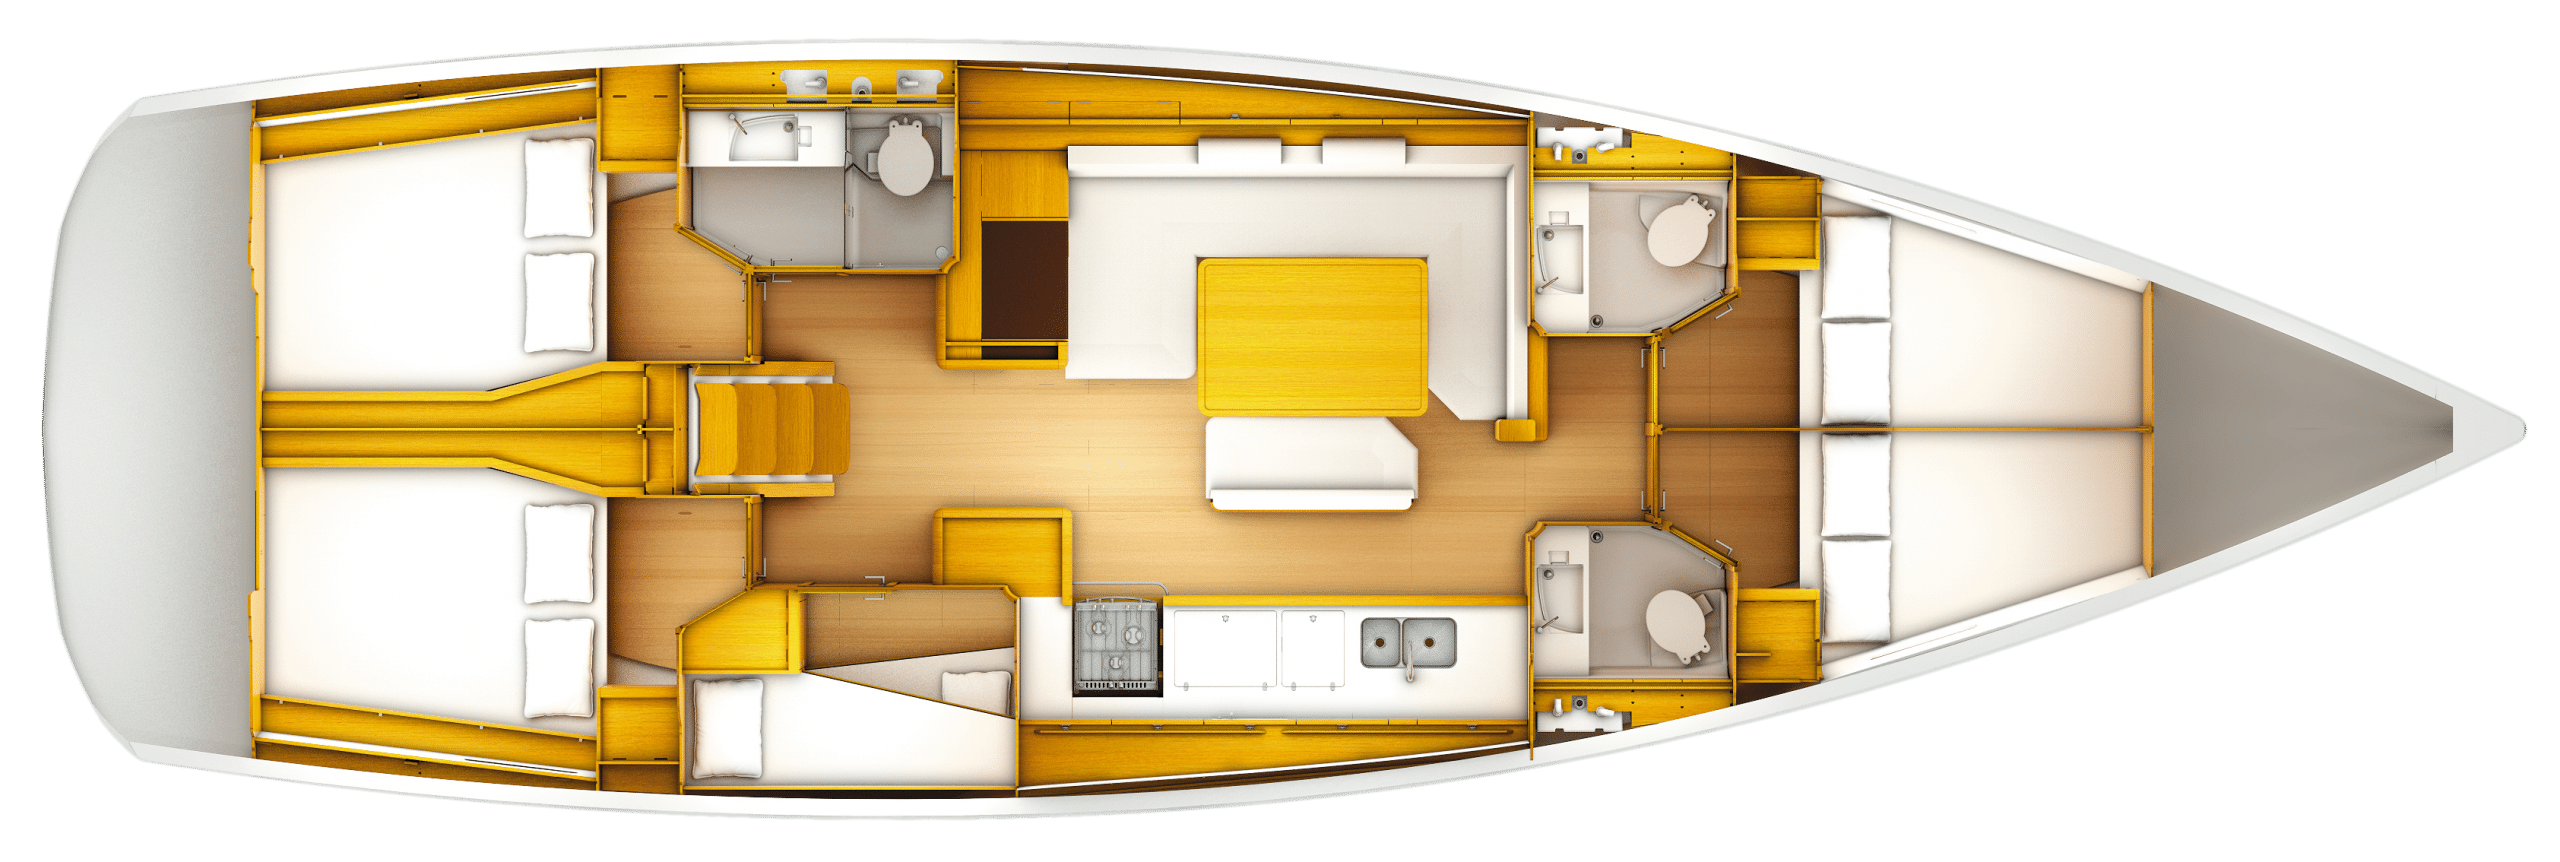 jeanneau-sun-odyssey-509-layout-5-cabins-3-heads